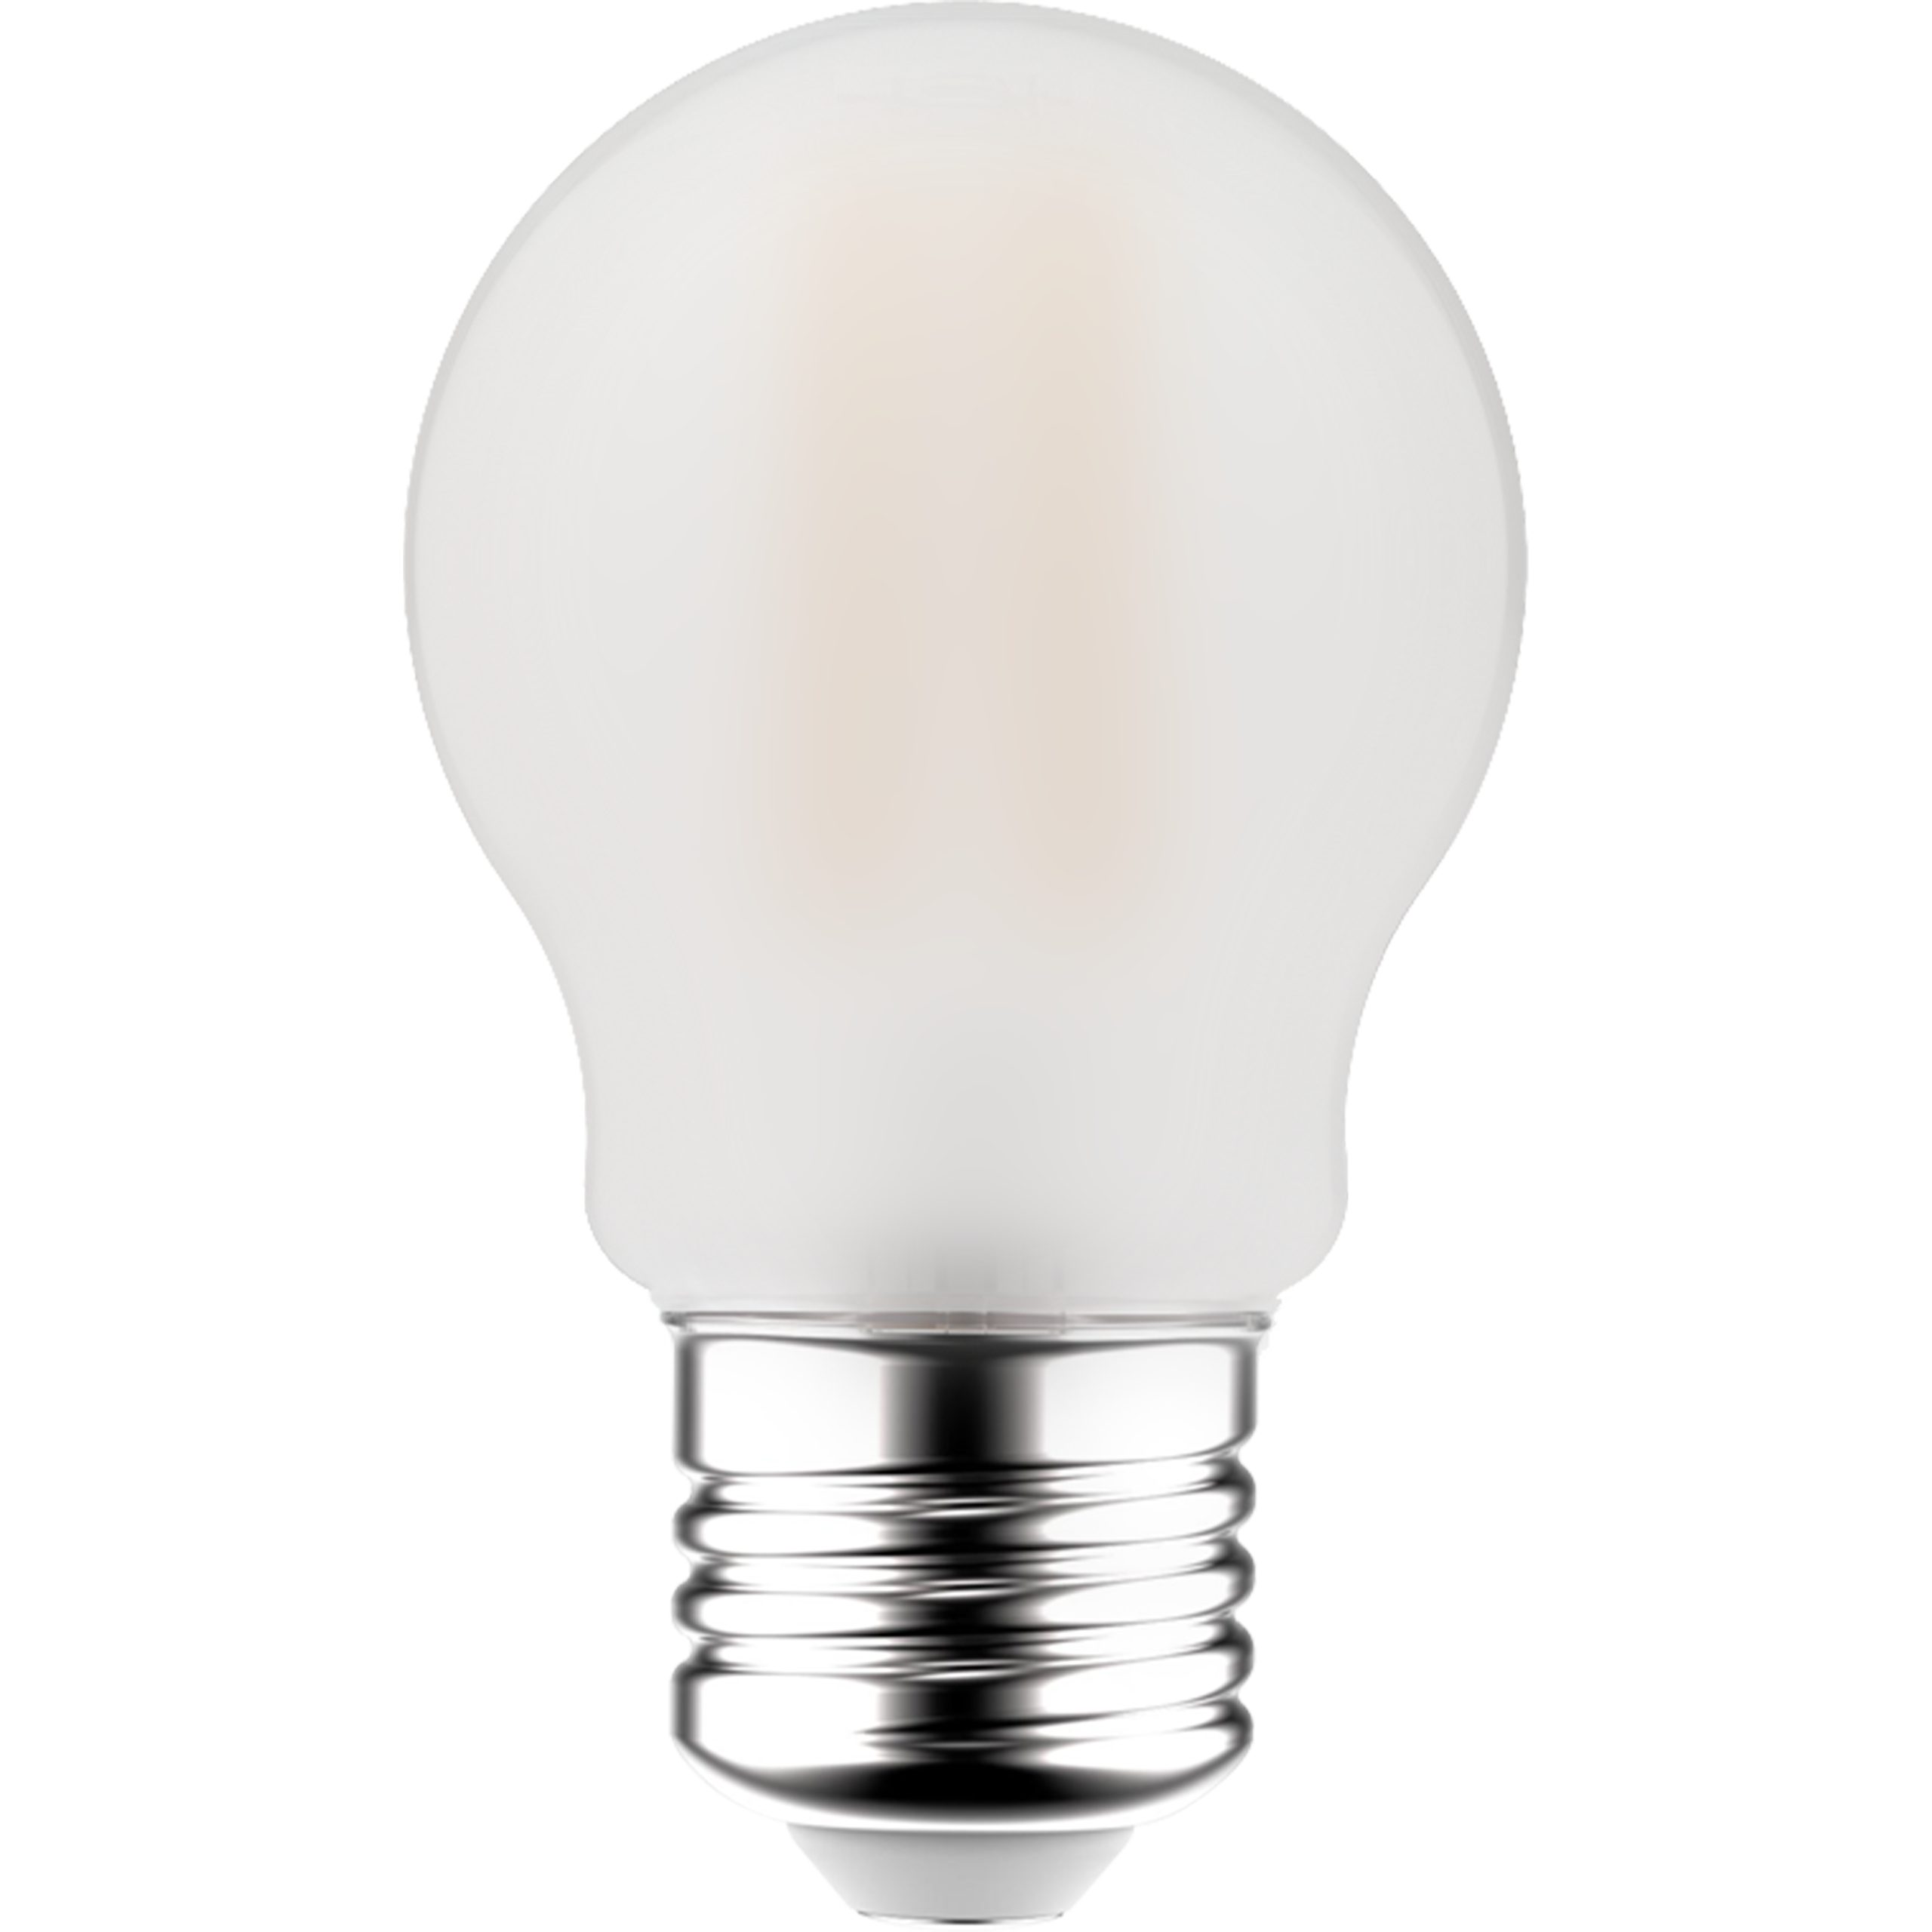 LED's light LED-Leuchtmittel 0620150 LED Kugel, E27, E27 4,5W warmweiß Opal G45